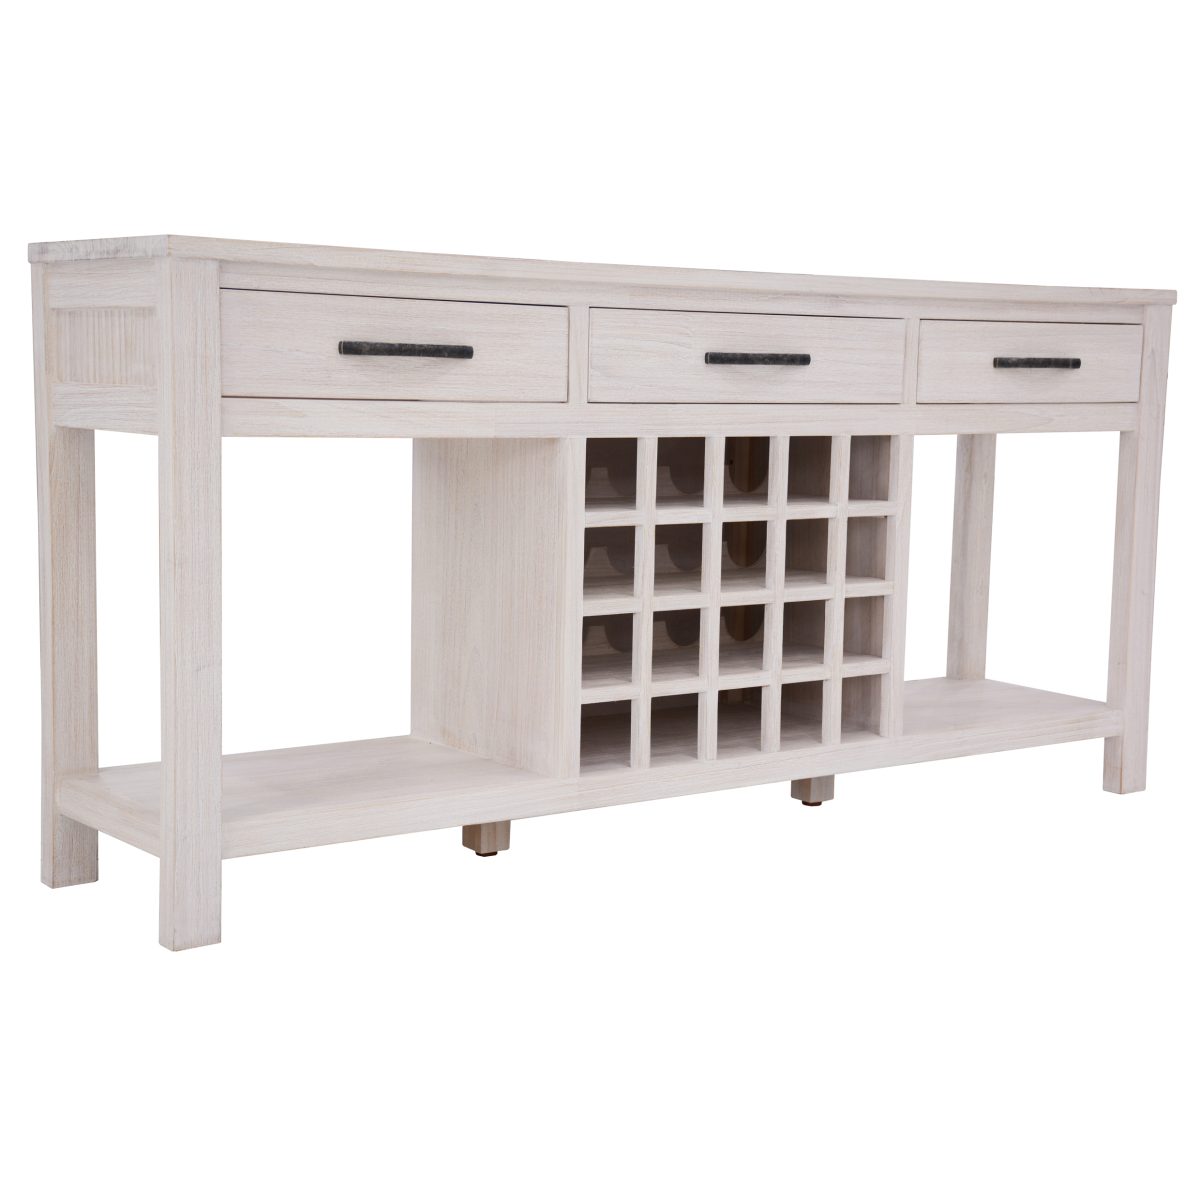 Foxglove Sideboard Buffet Wine Cabinet Bar Bottle Wooden Storage Rack – White